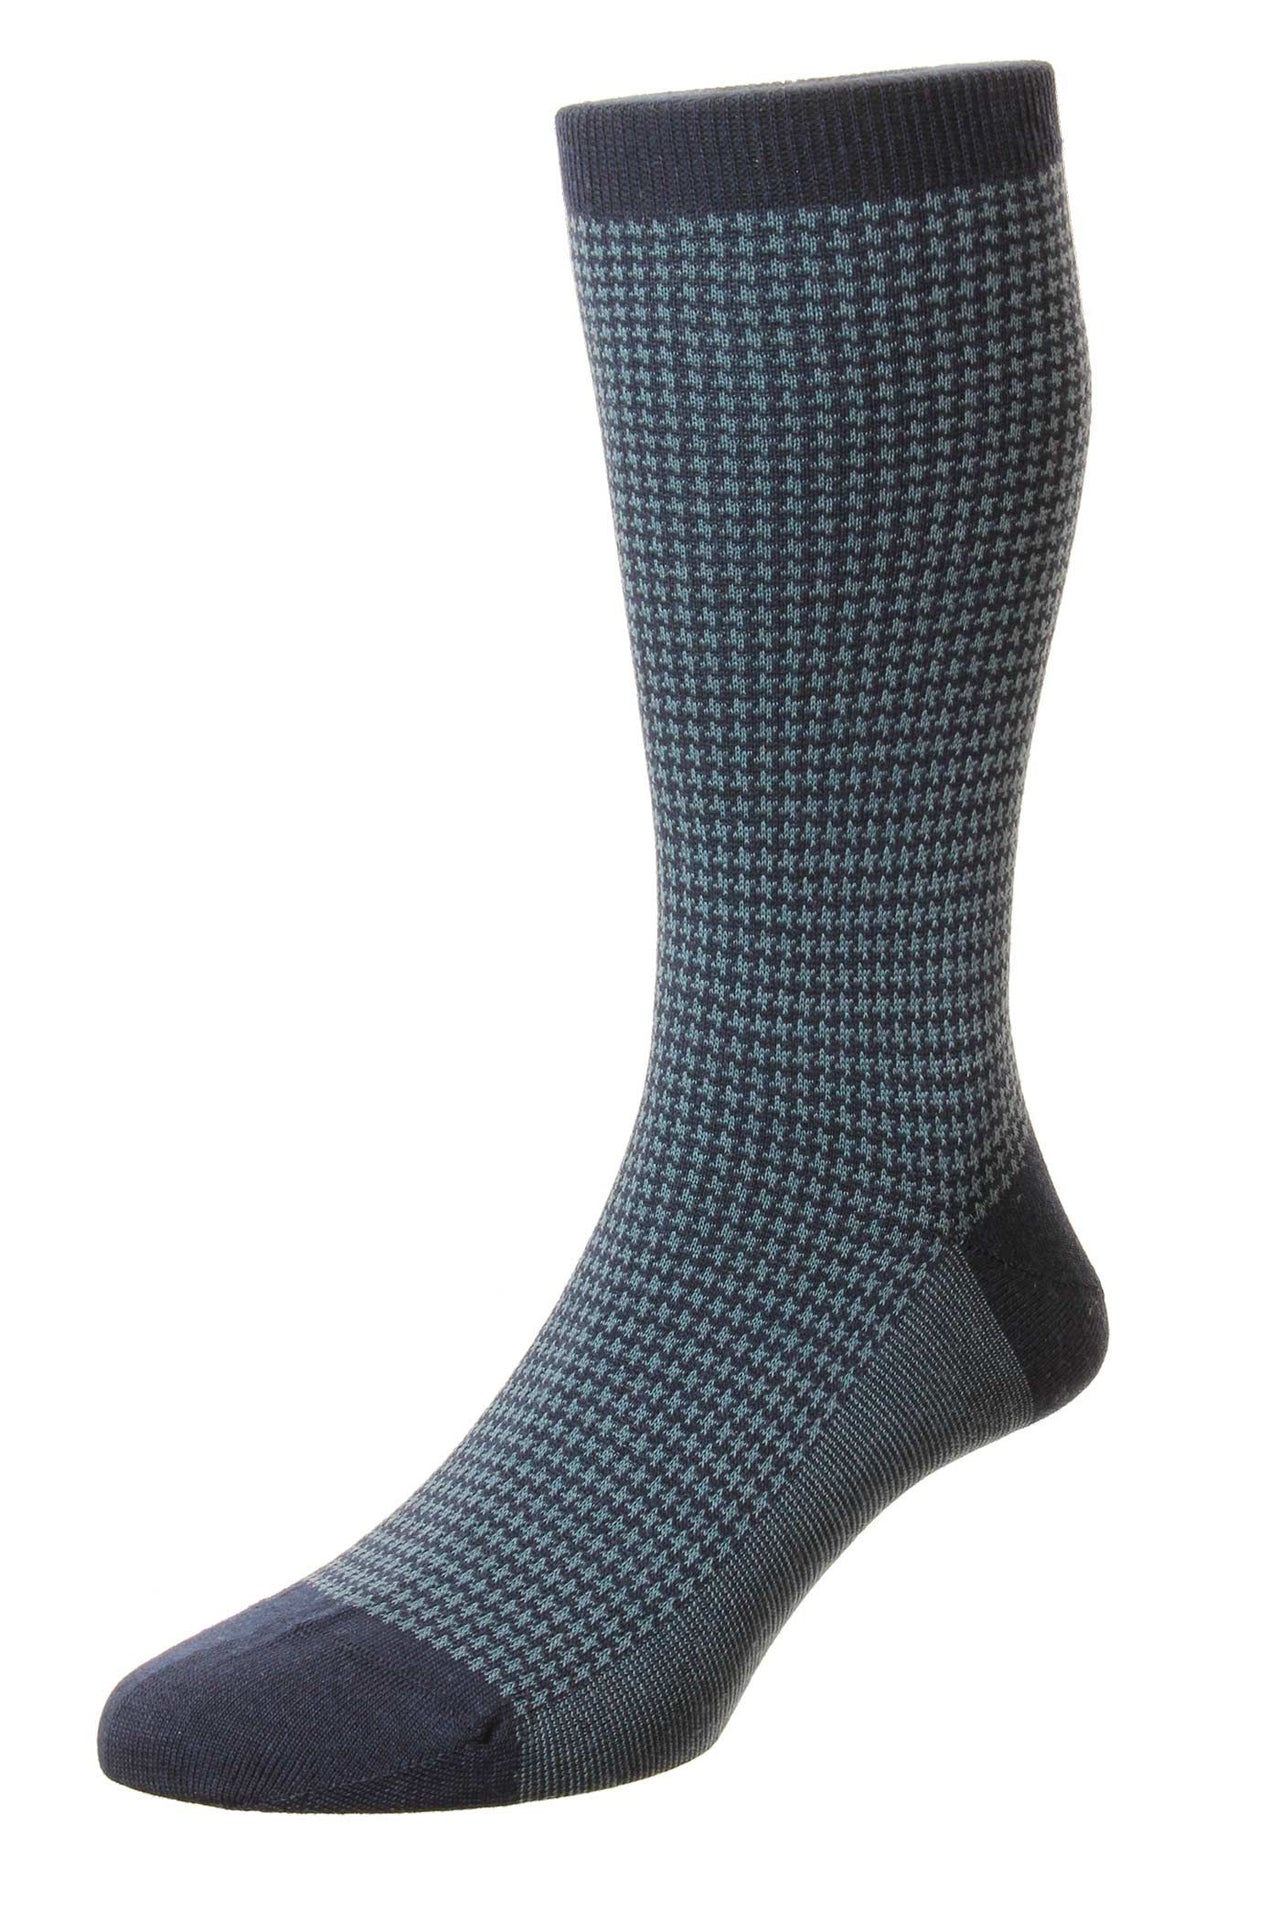 PANTHERELLA Highbury Houndstooth Merino Wool Men's Socks NAVY